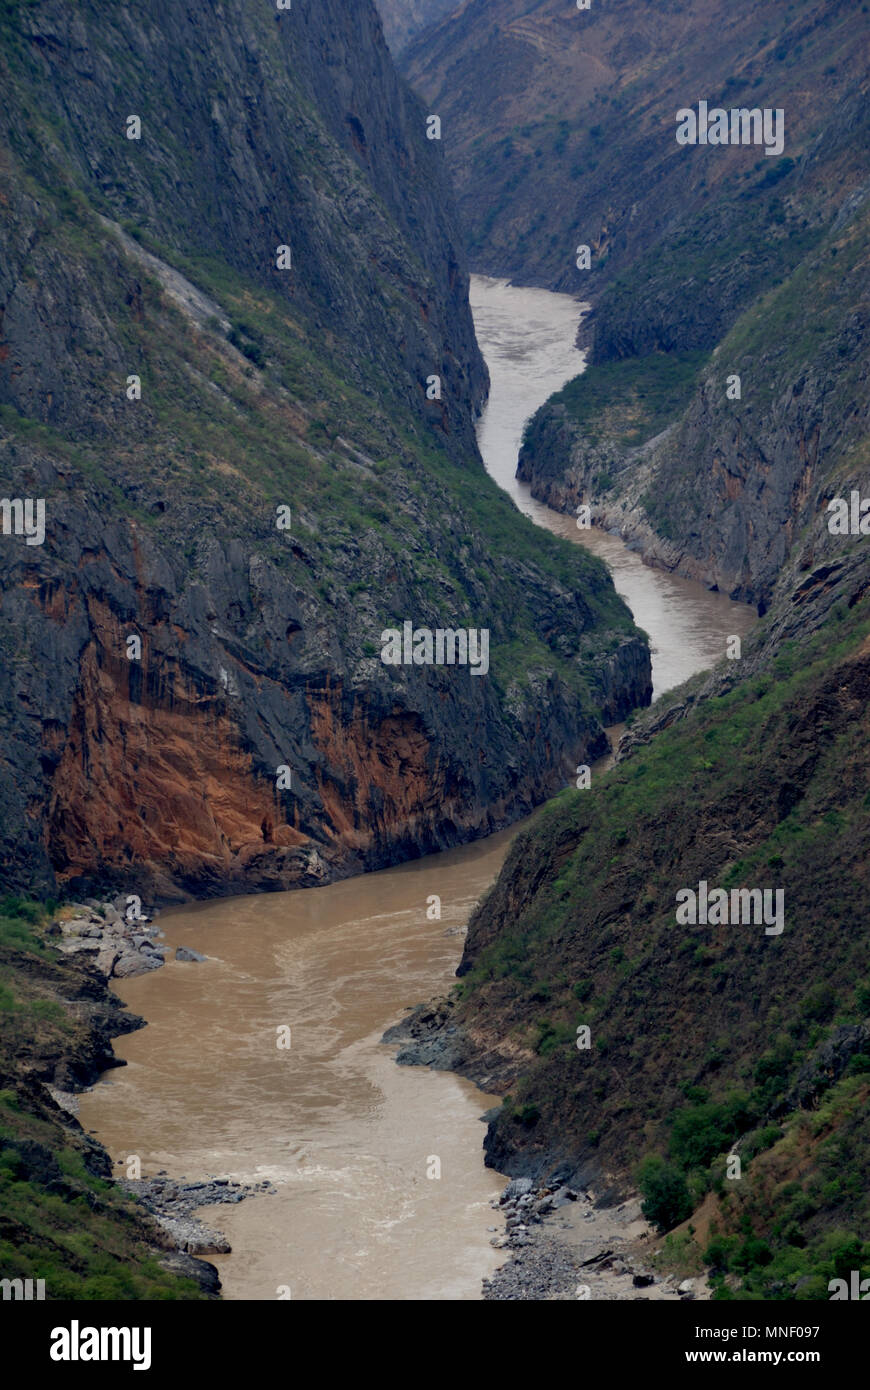 Tiger saltando Gorge (Chino: "¢ÌøÏ¿; pinyin: H¨³ti¨¤o Xi¨¢) es un cañón en el Río Yangtze ¨C llamado localmente el Golden Sands River (½ðÉ³½-; J¨©nsh Foto de stock